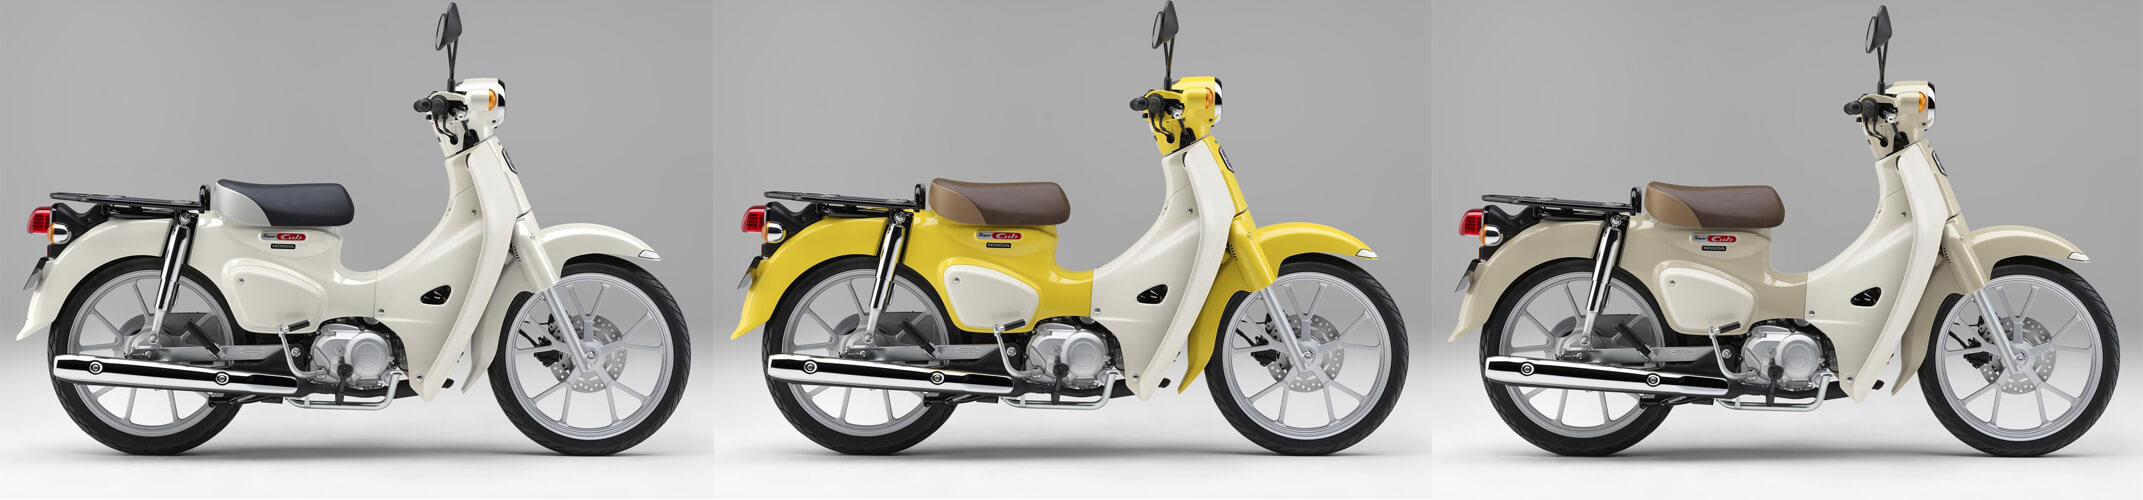 New Super Cub 110 2022 สีขาว-สีเหลือง-สีเบจ